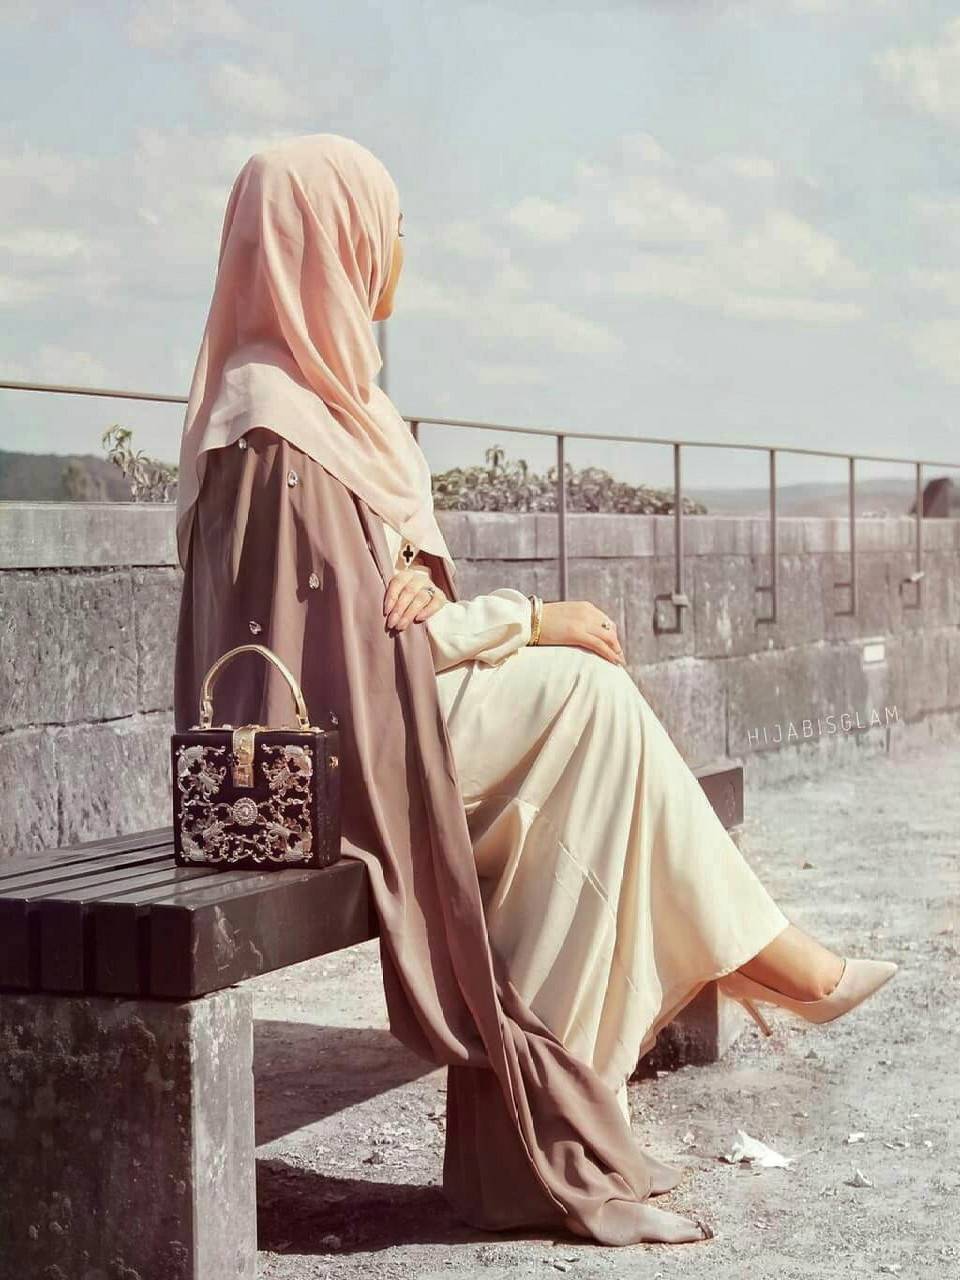 Muslim Women Wallpapers Top Free Muslim Women Backgrounds 